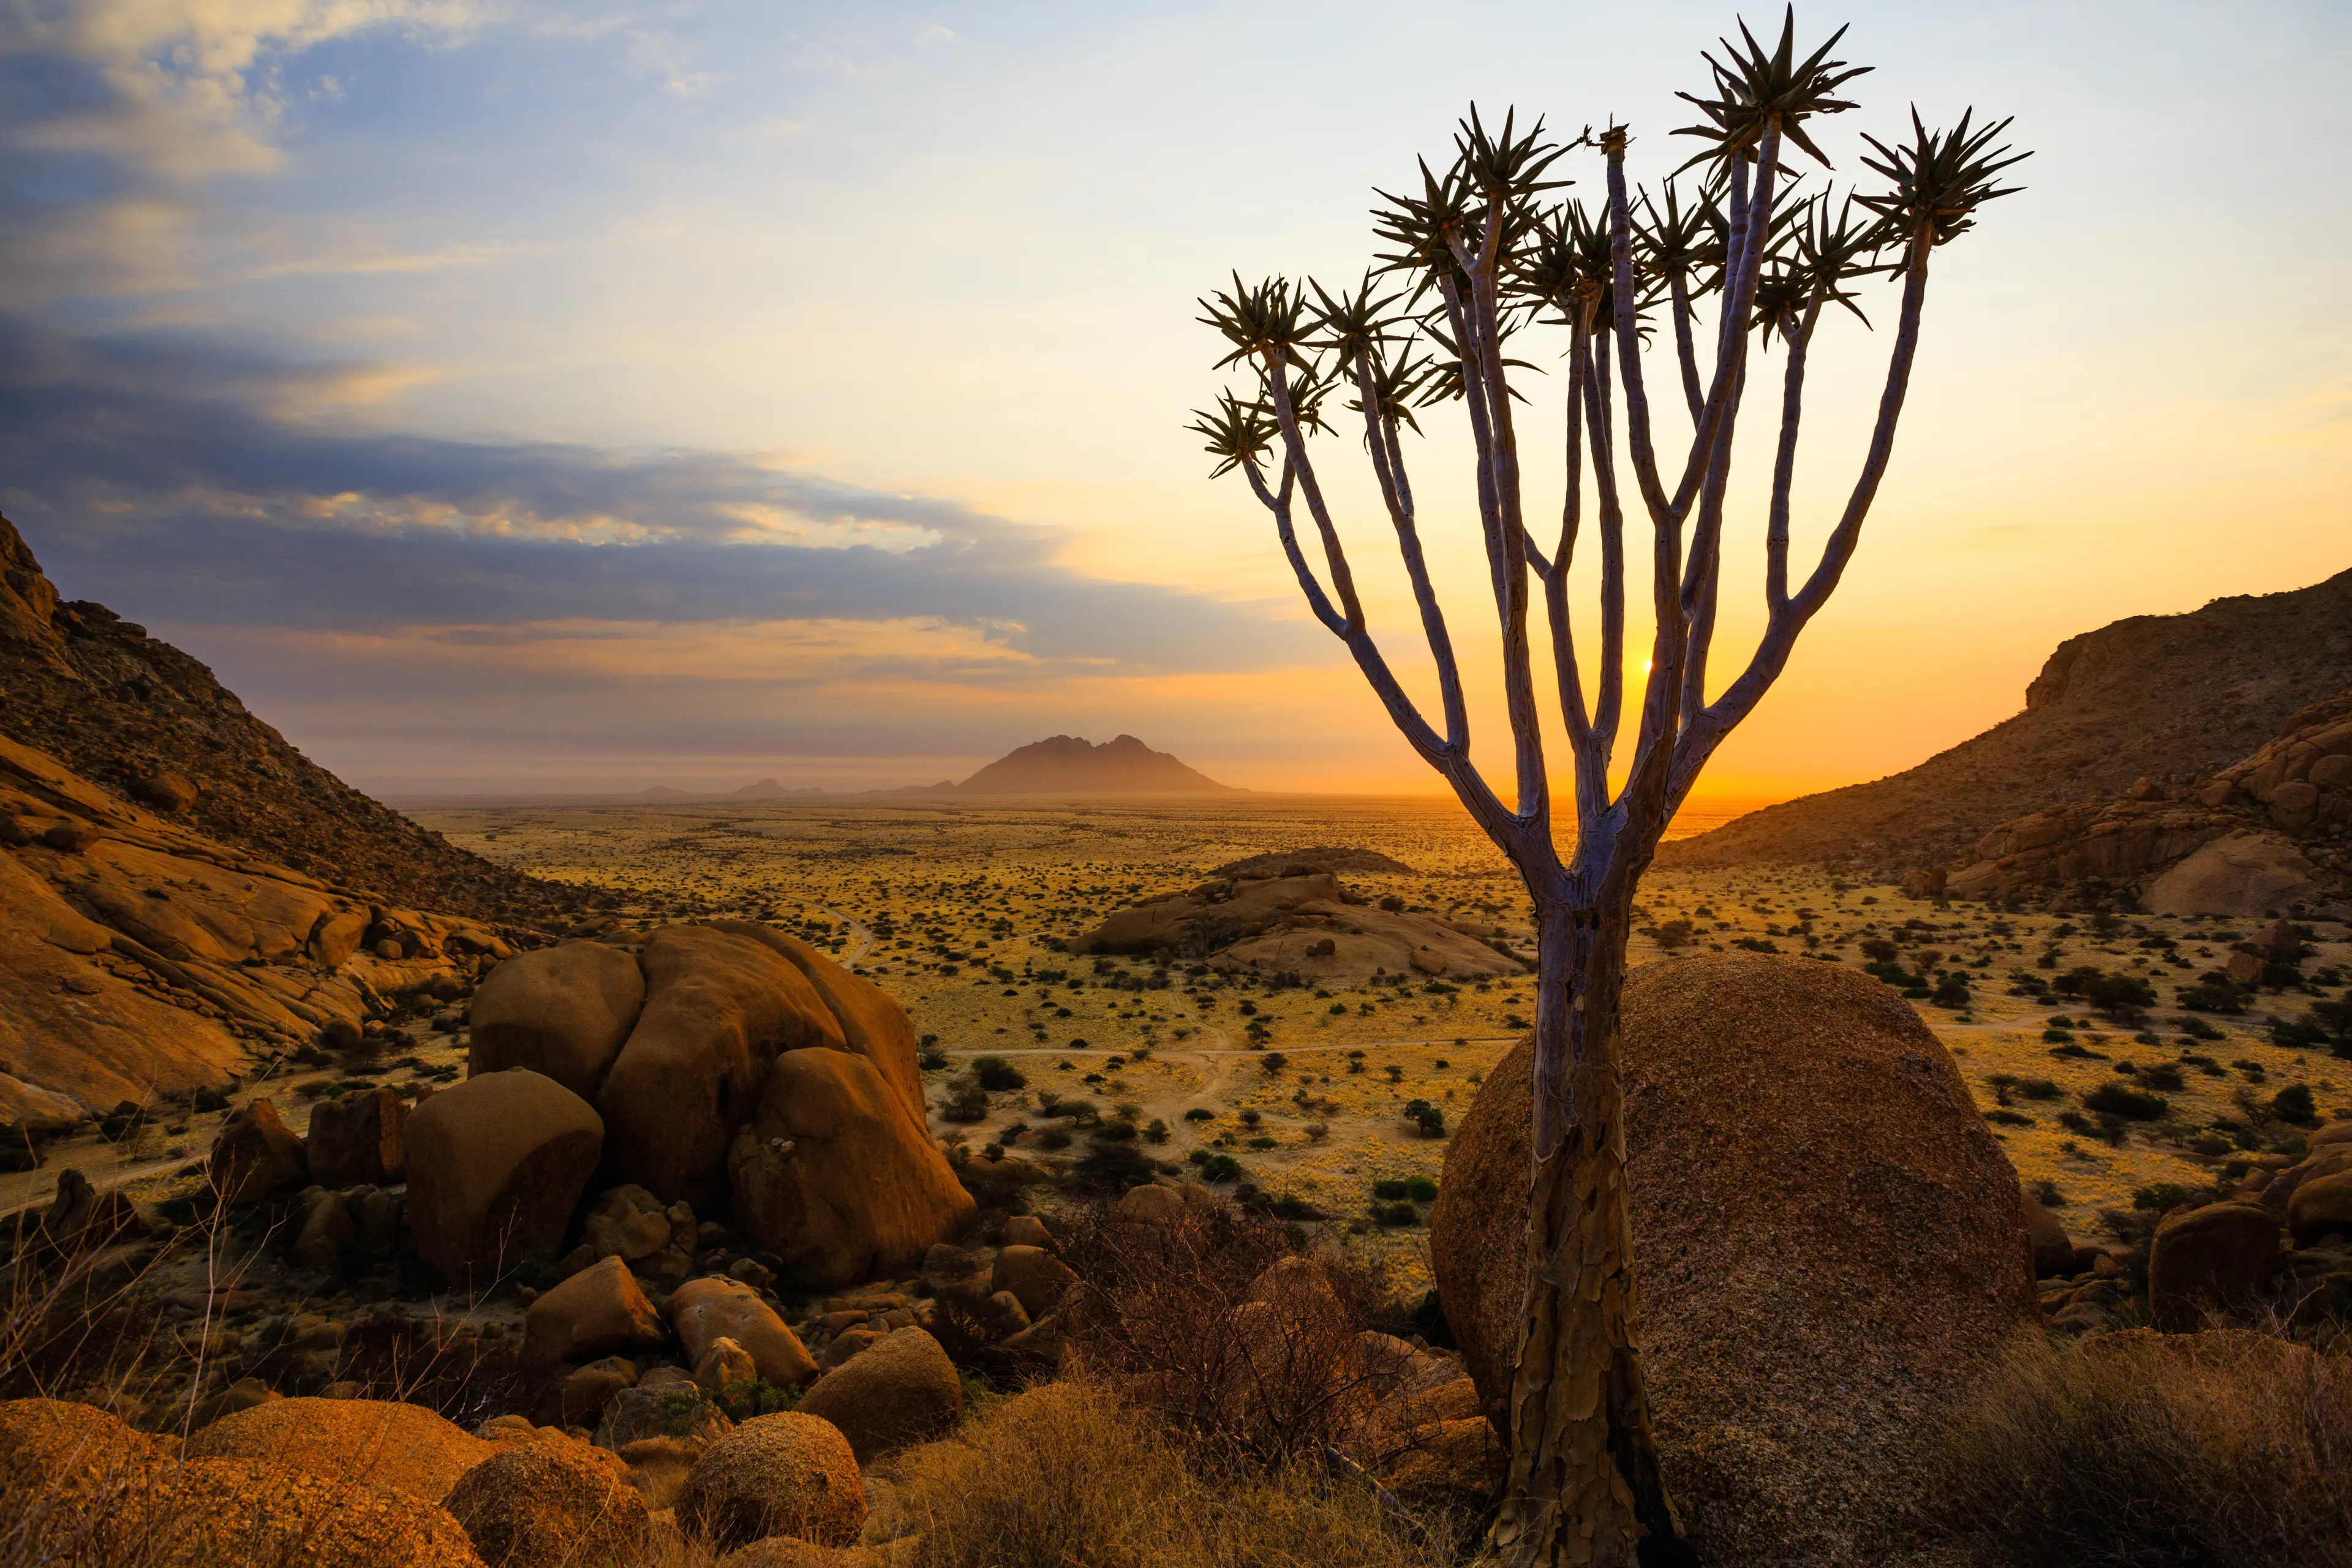 View of the Namib desert landscape